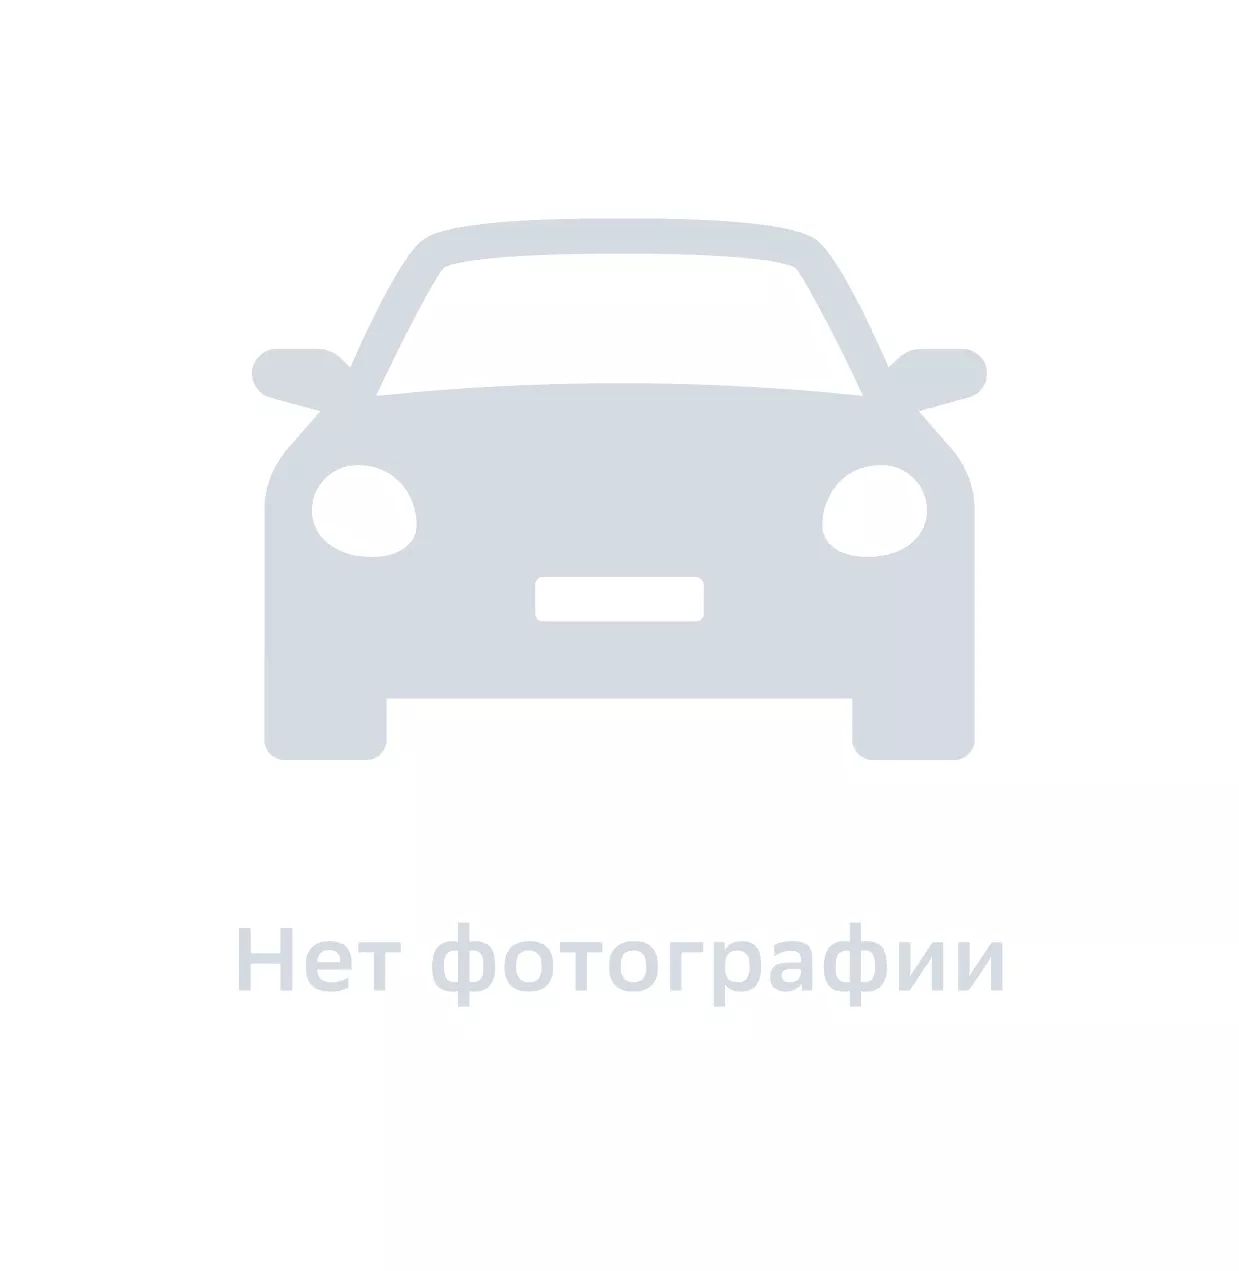 Бачок ГТЦ, Hyundai-KIA, арт. 5852907010DS, цена за 1 шт.